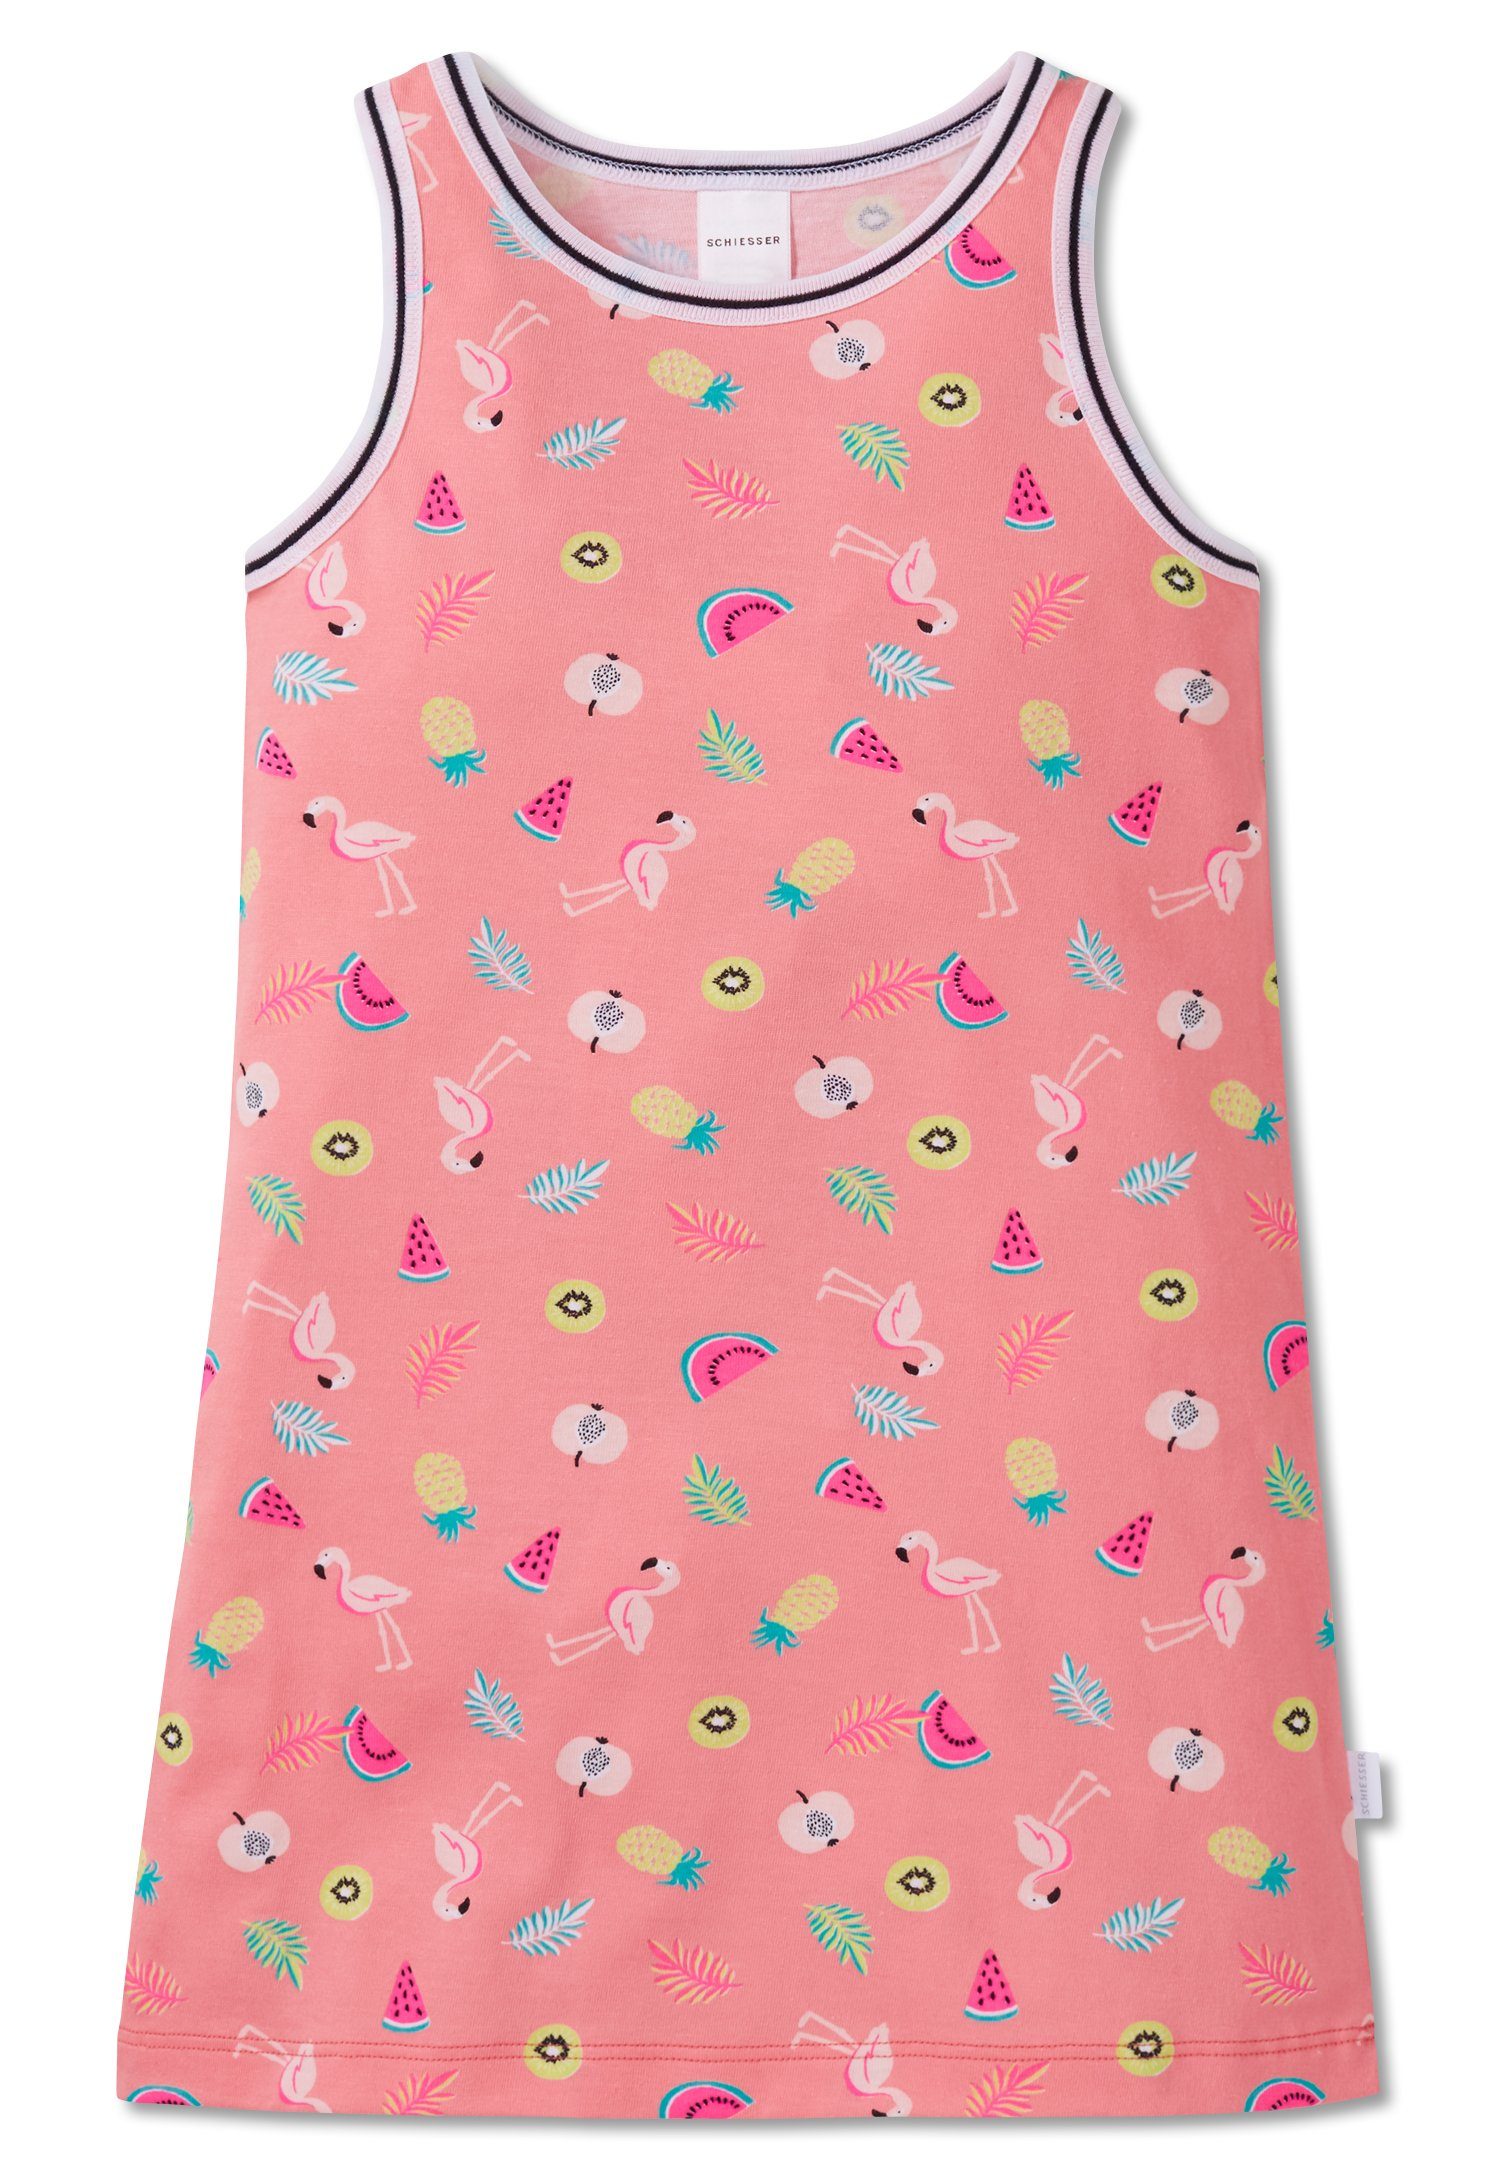 Mädchen (Set, Set) Sleepshirt, Jersey Schlafanzug Single Schiesser Nachthemd Mood Flamingos, Summer Nachthemd